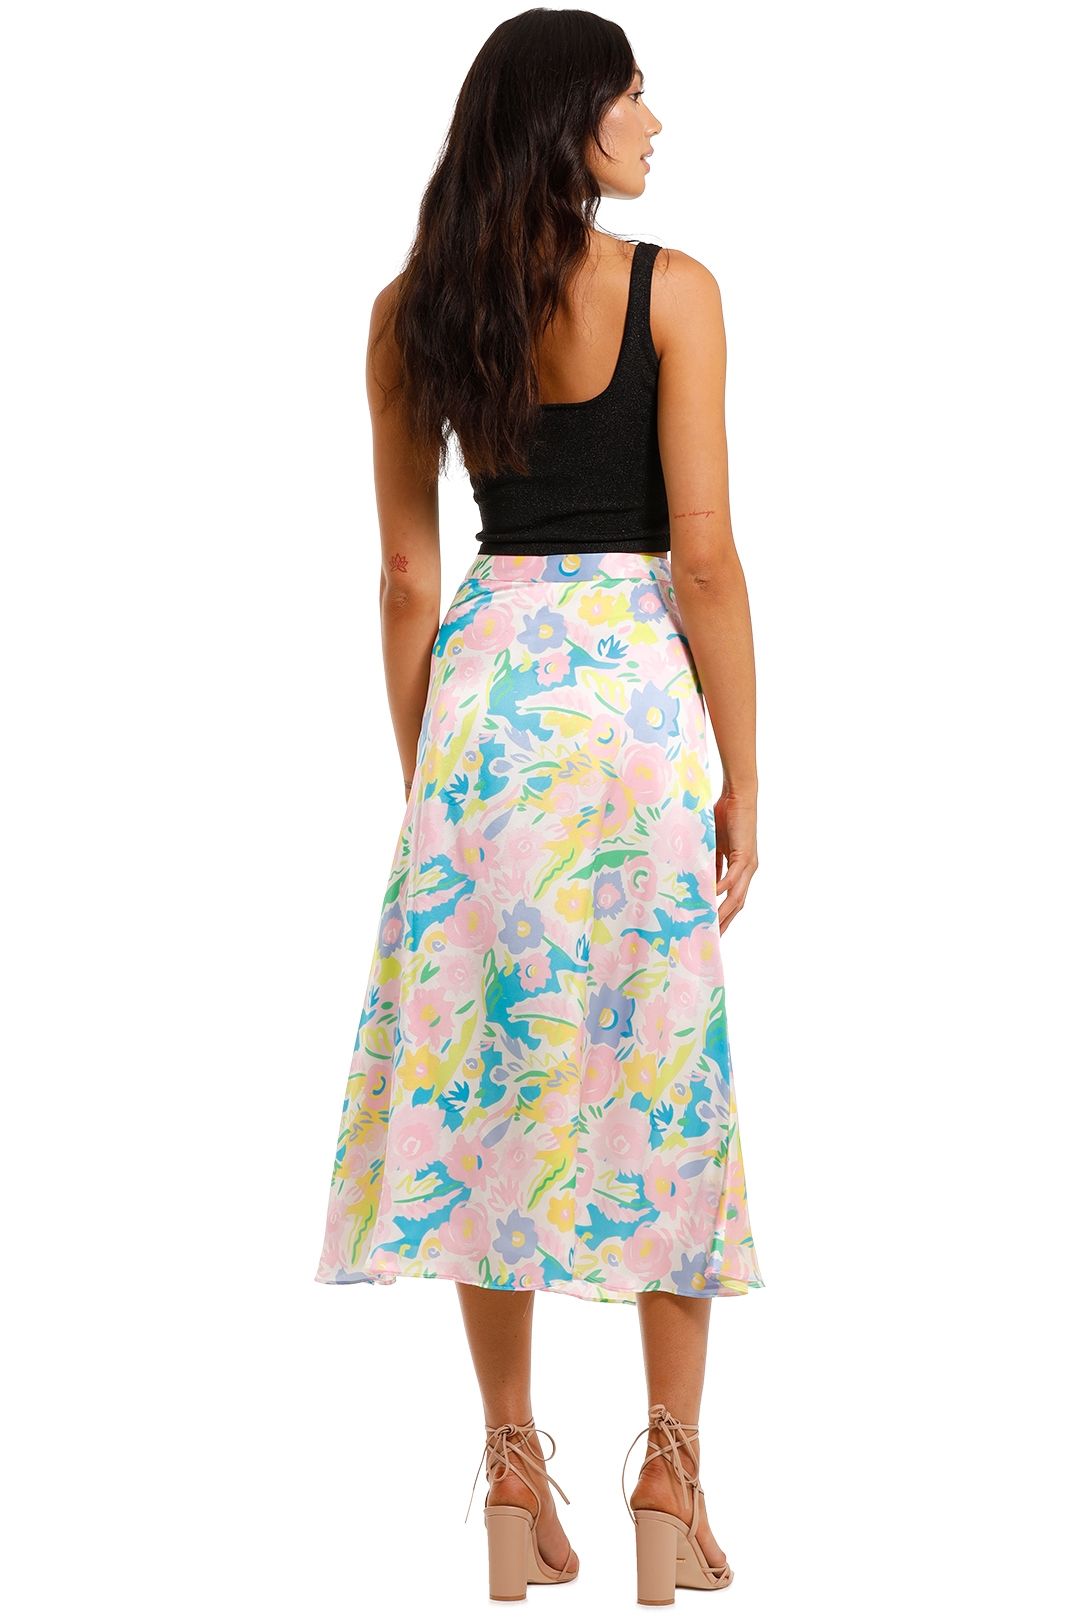 Olivia Rubin Adrianne Skirt floral